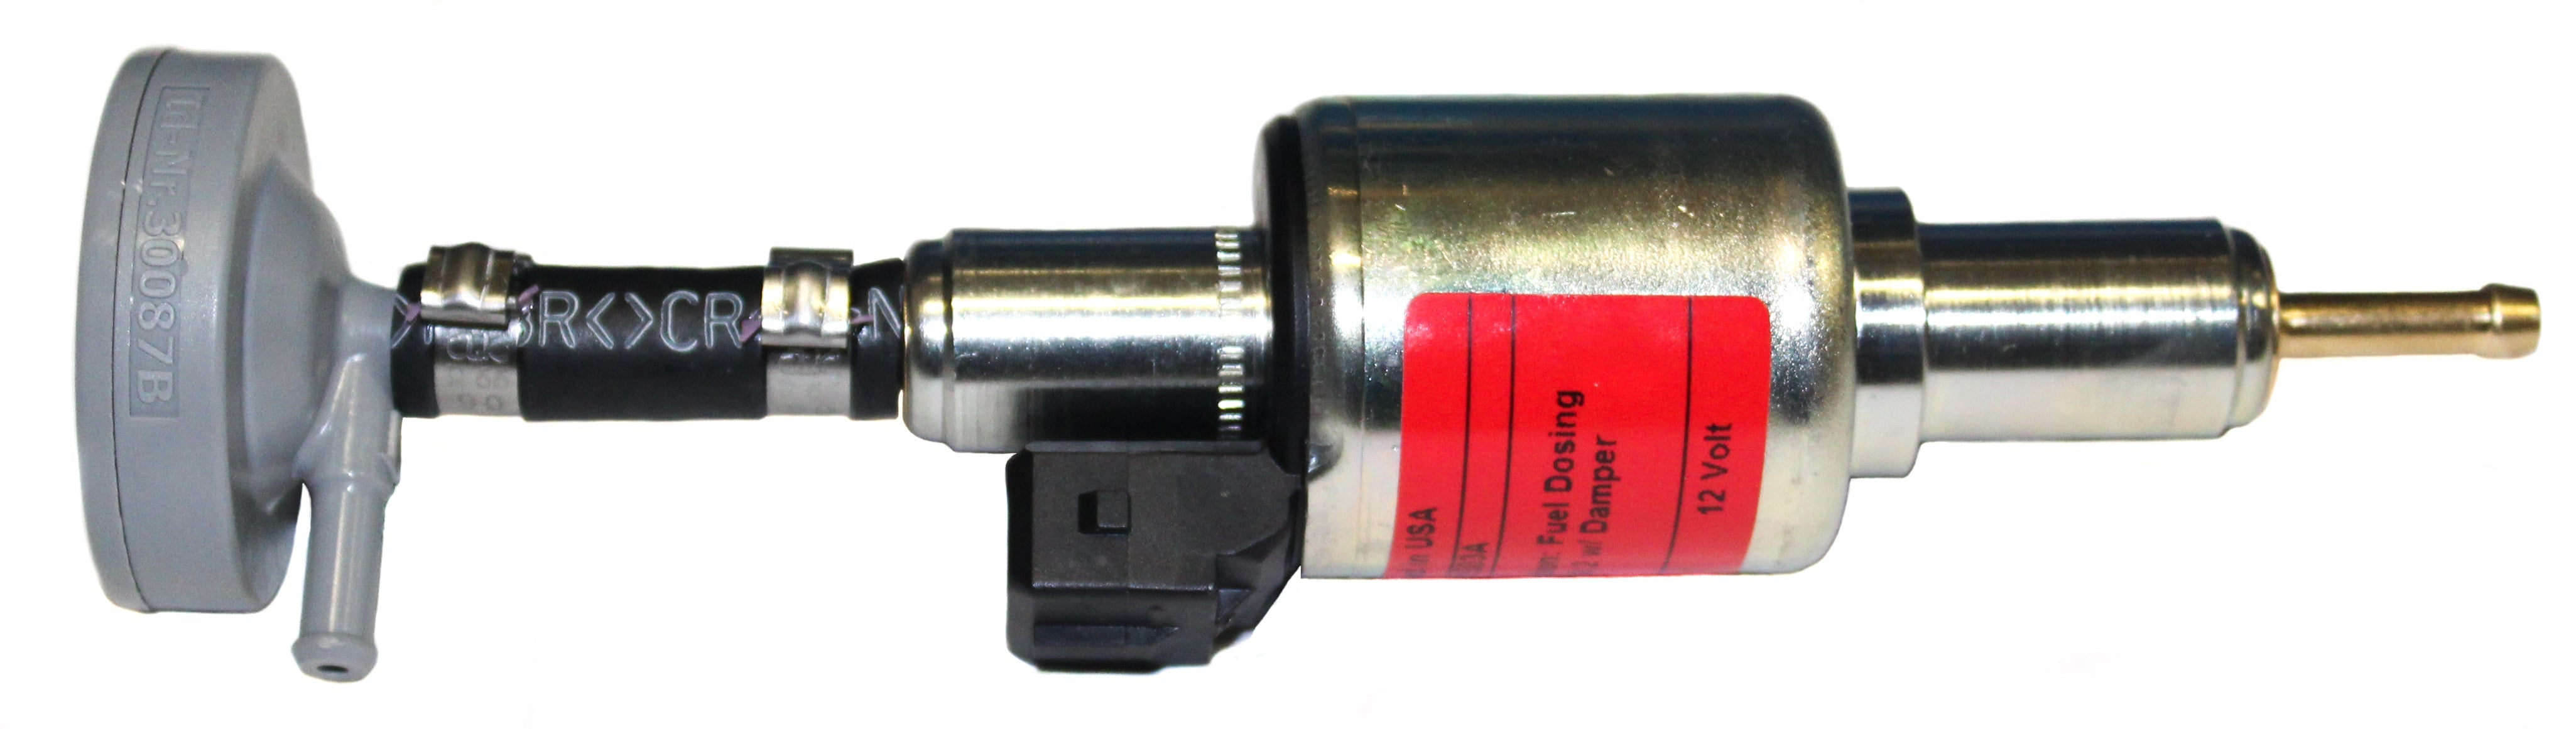 Webasto Fuel Dosing Pump DP2 12v 1320317A